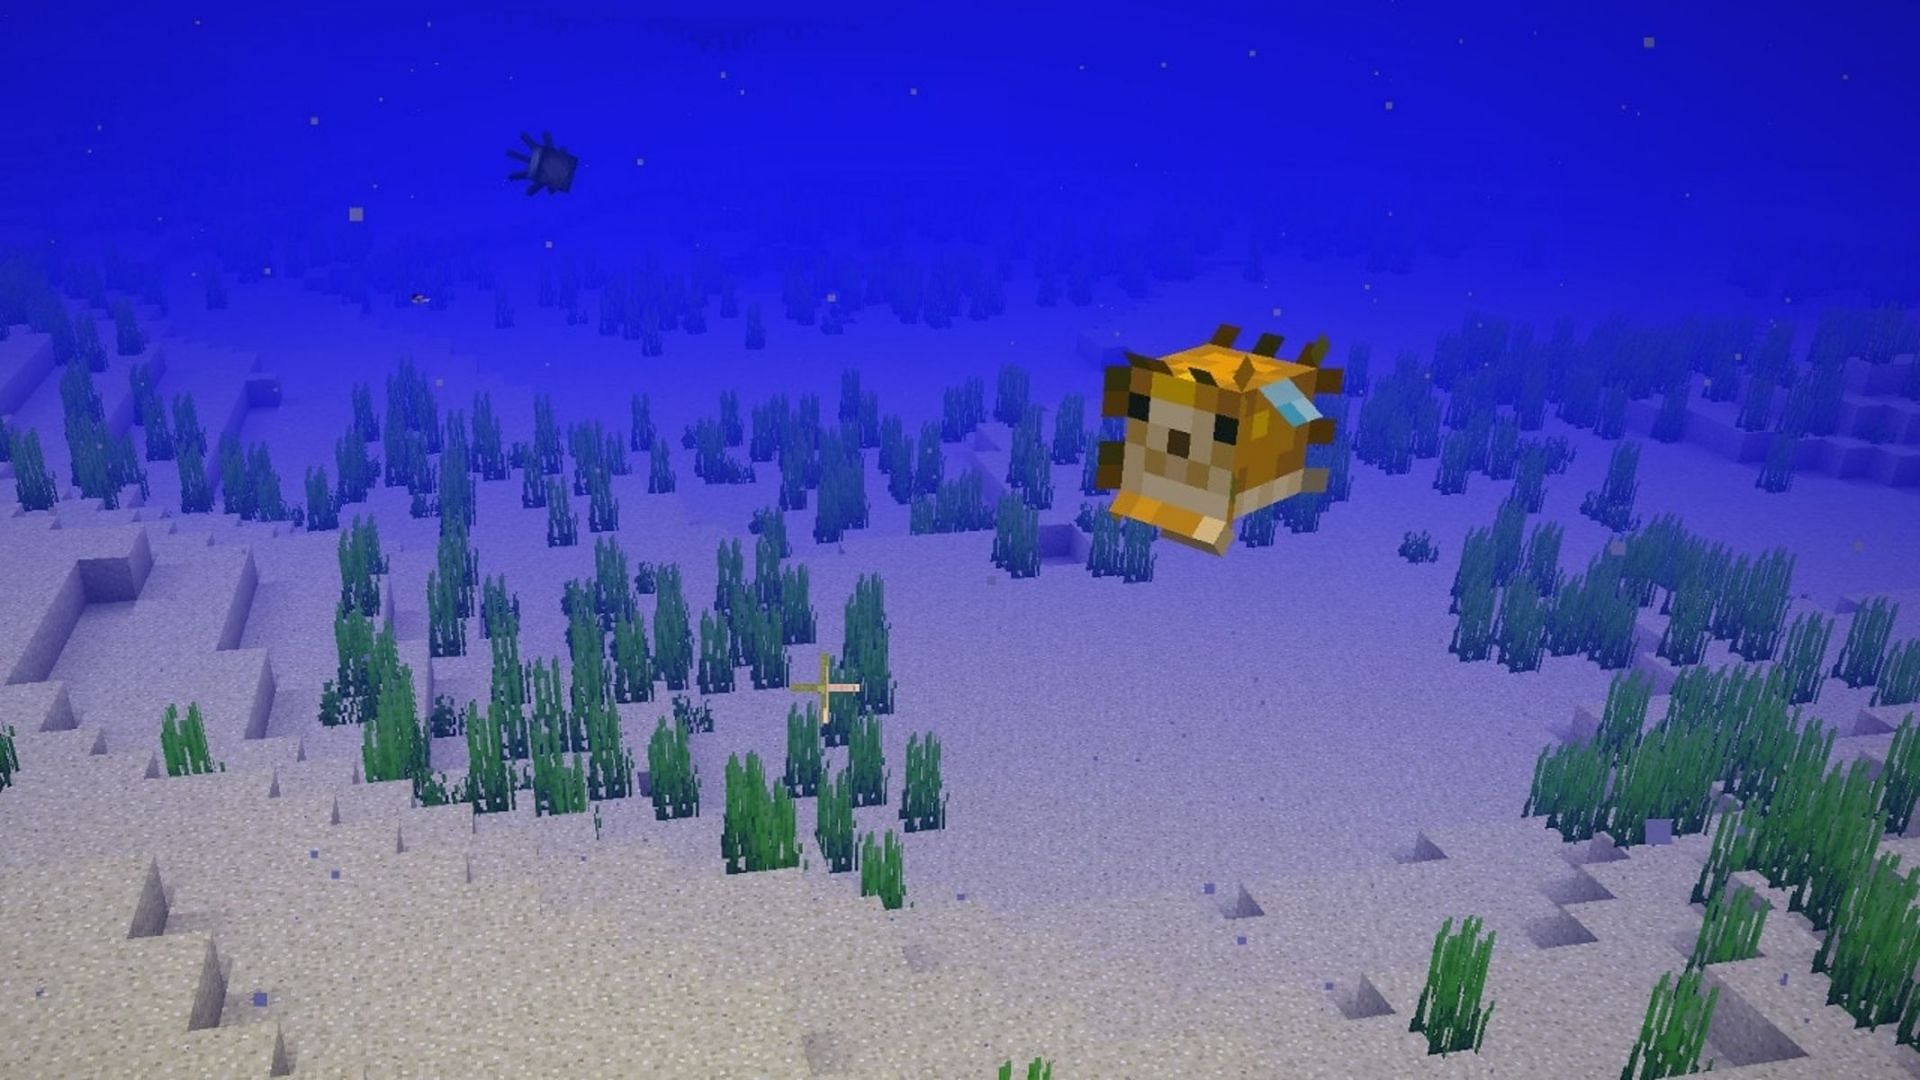 Pufferfish were introduced in version 1.13 (Image via Minecraft.net)